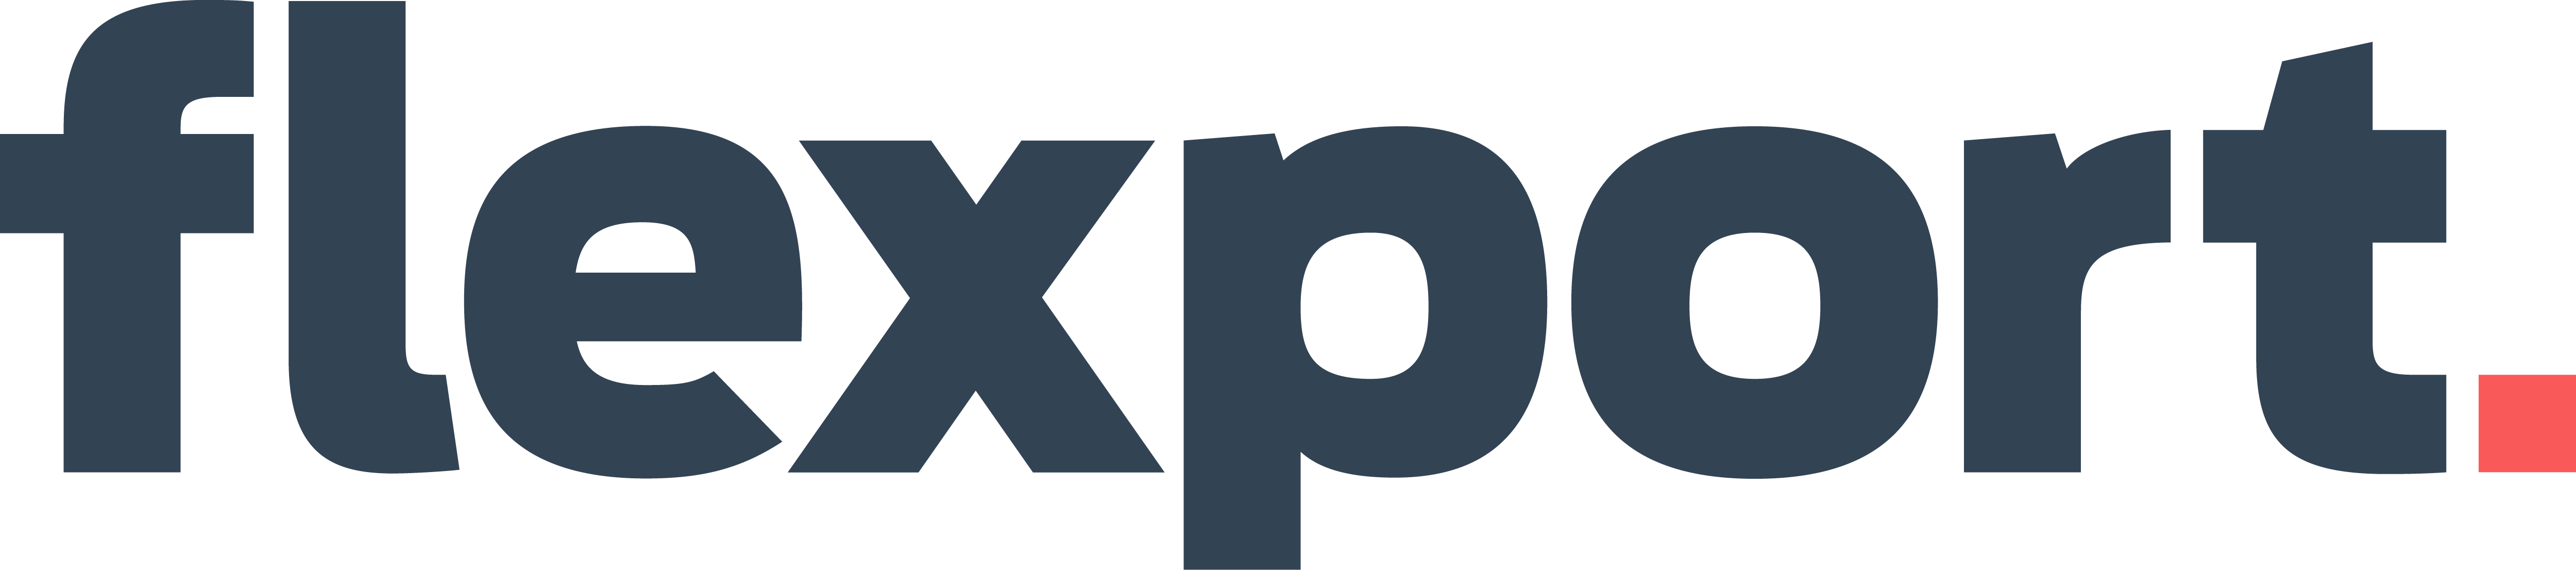 Flexport Main Logo - Color.png